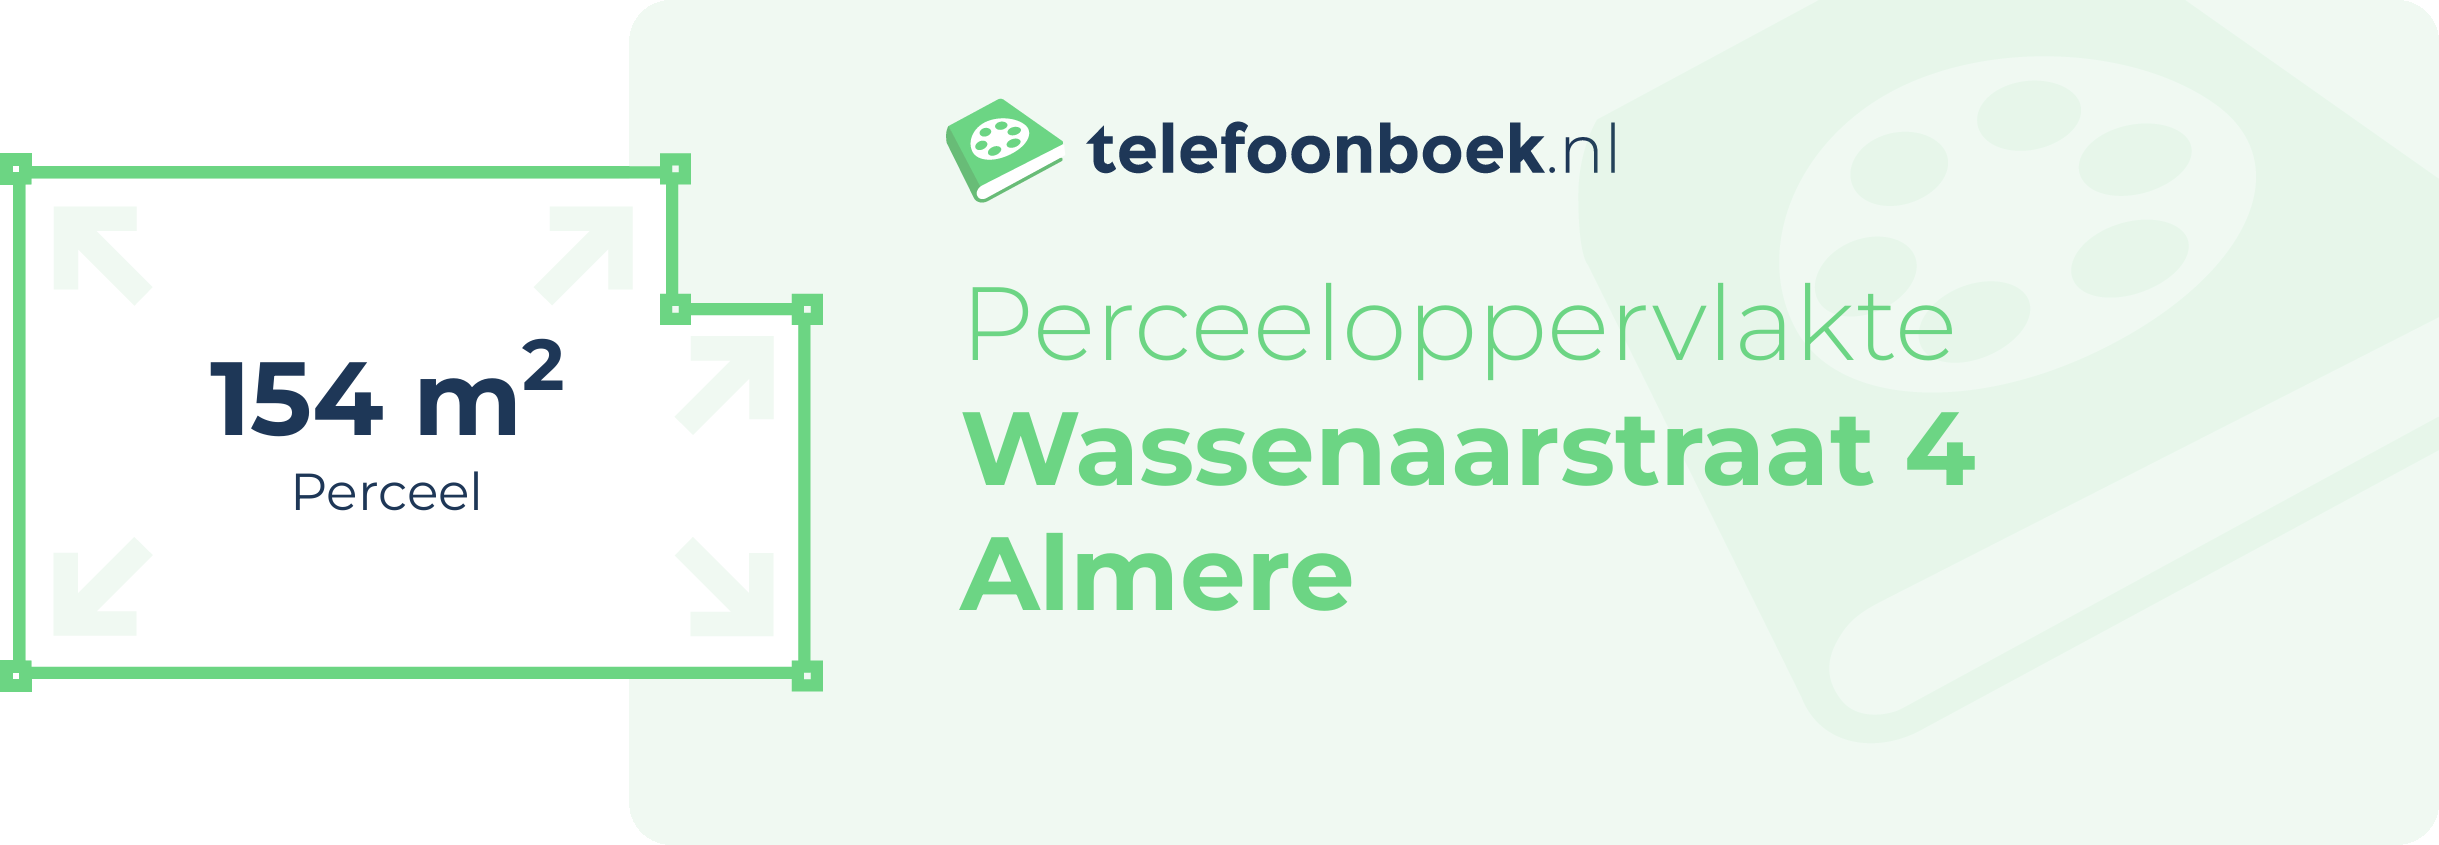 Perceeloppervlakte Wassenaarstraat 4 Almere